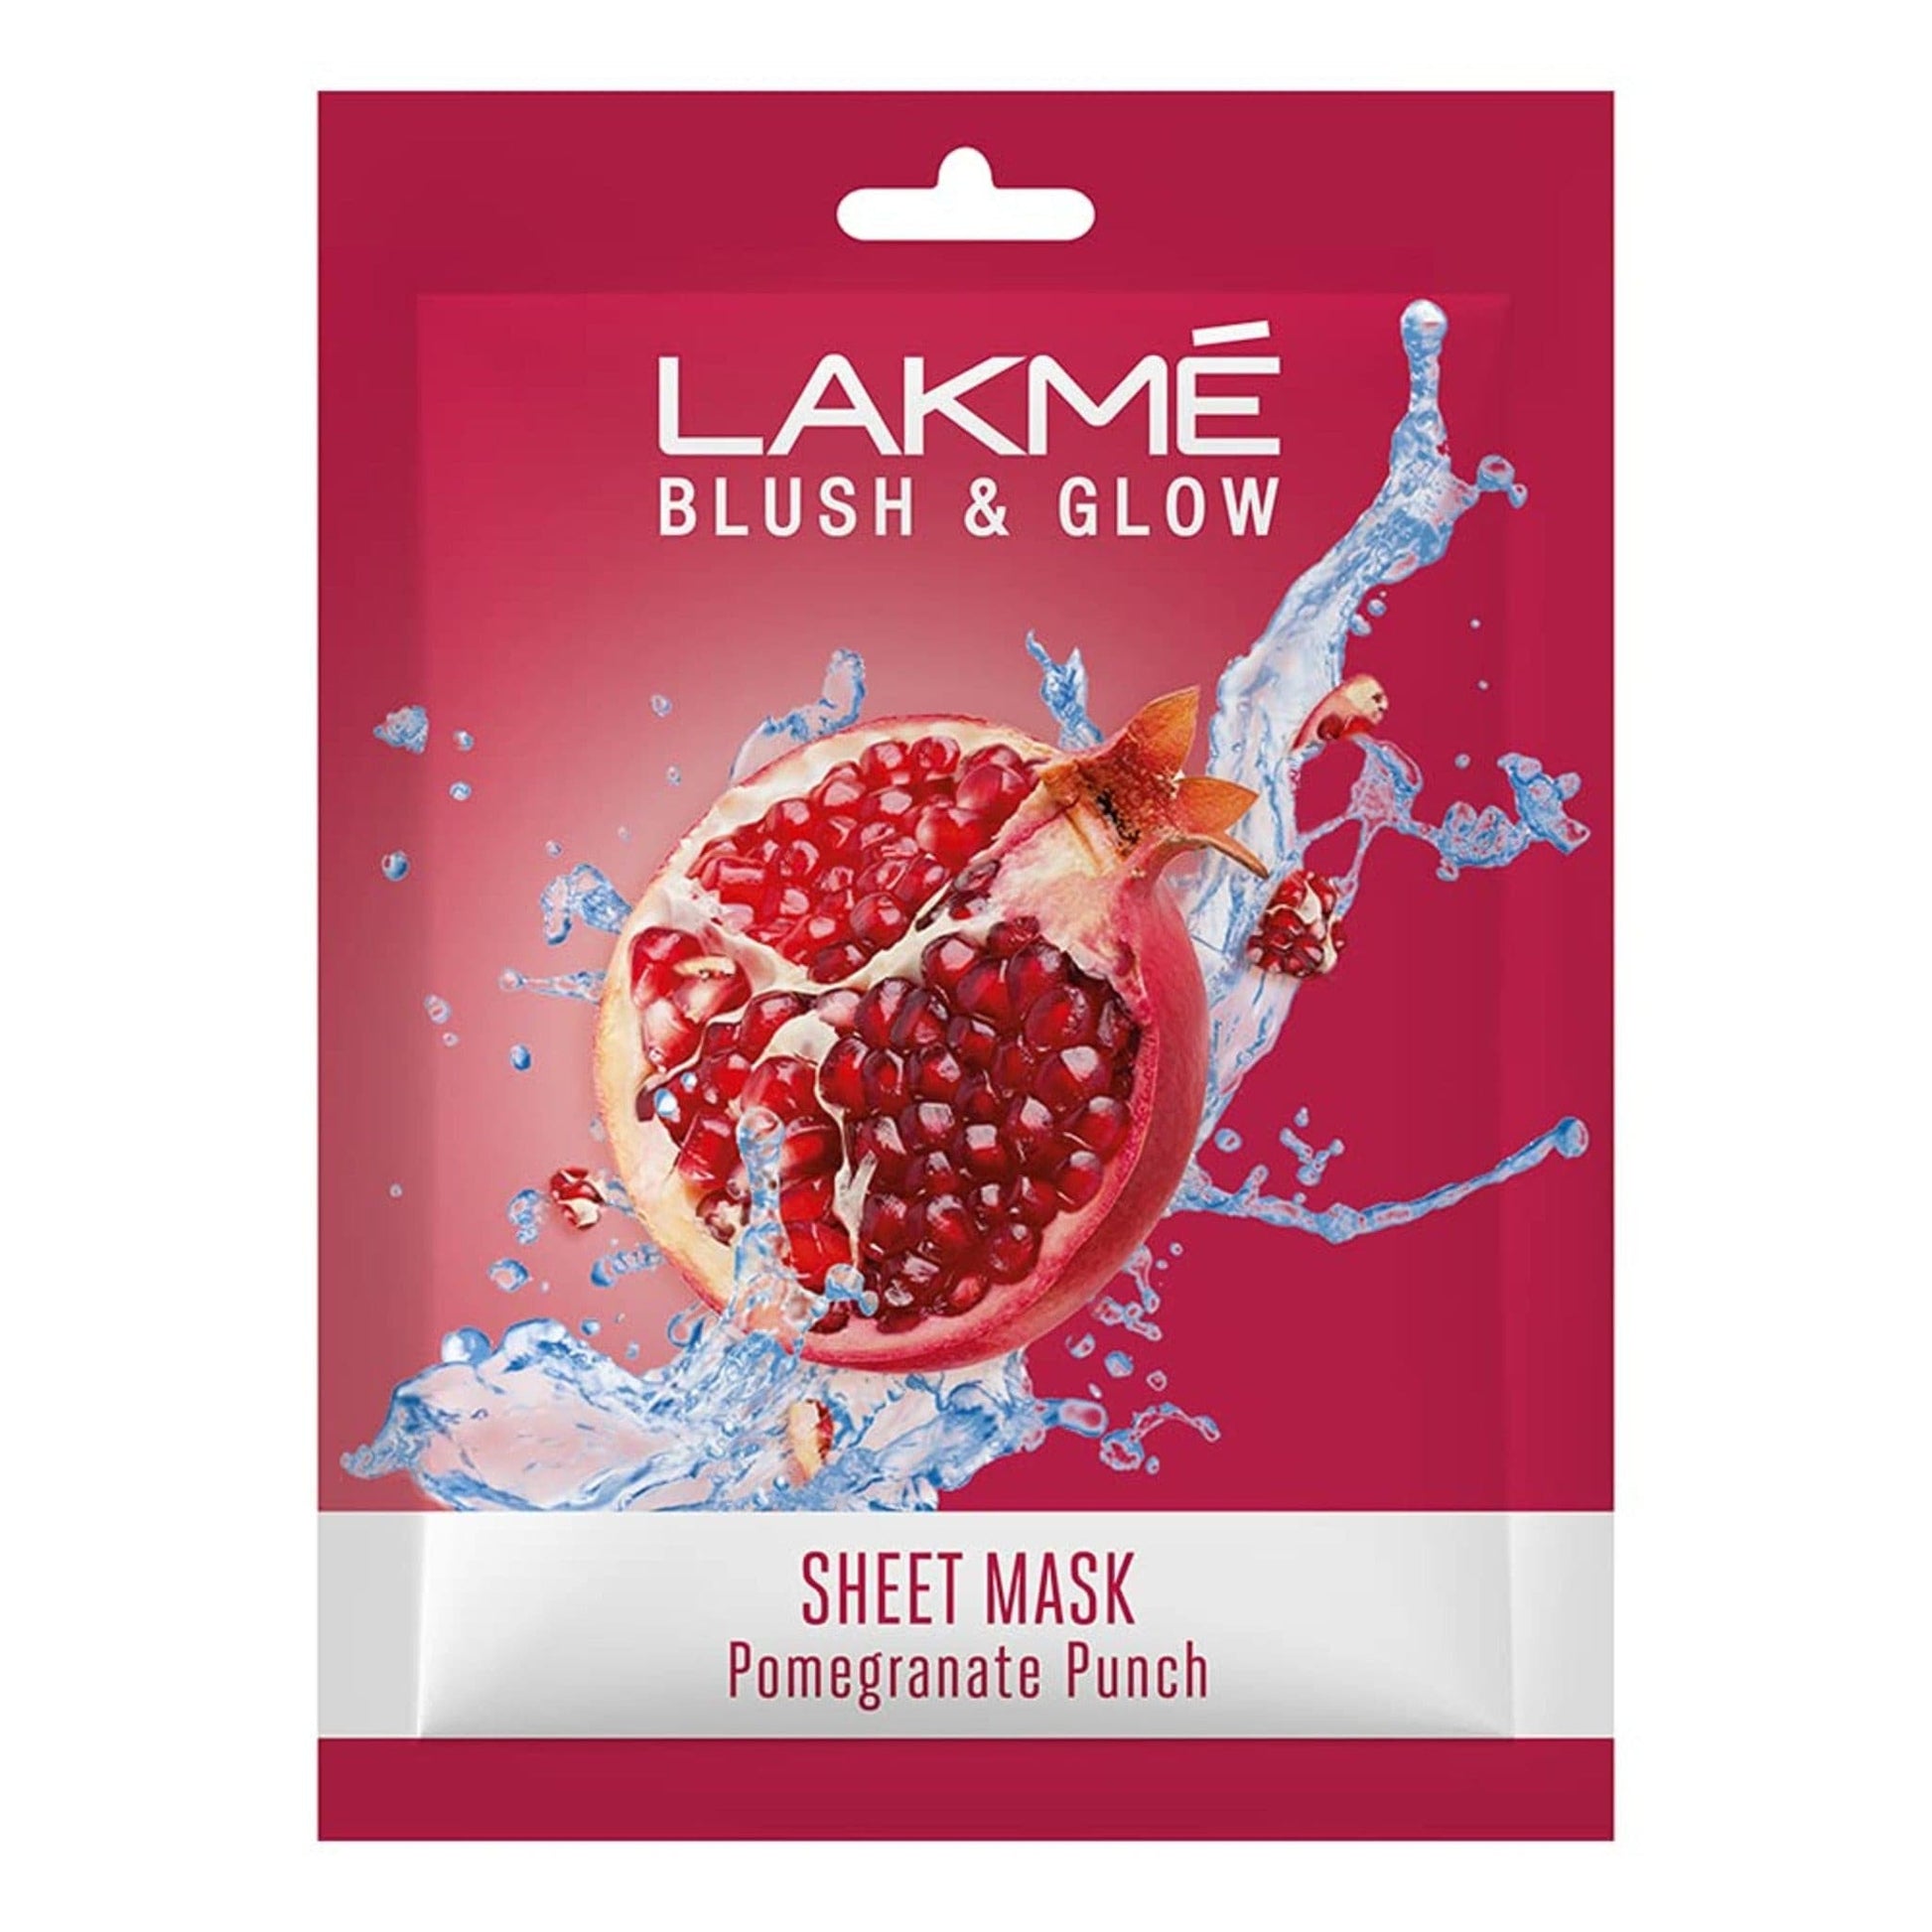 Lakme Blush & Glow Pomegranate Sheet Mask.